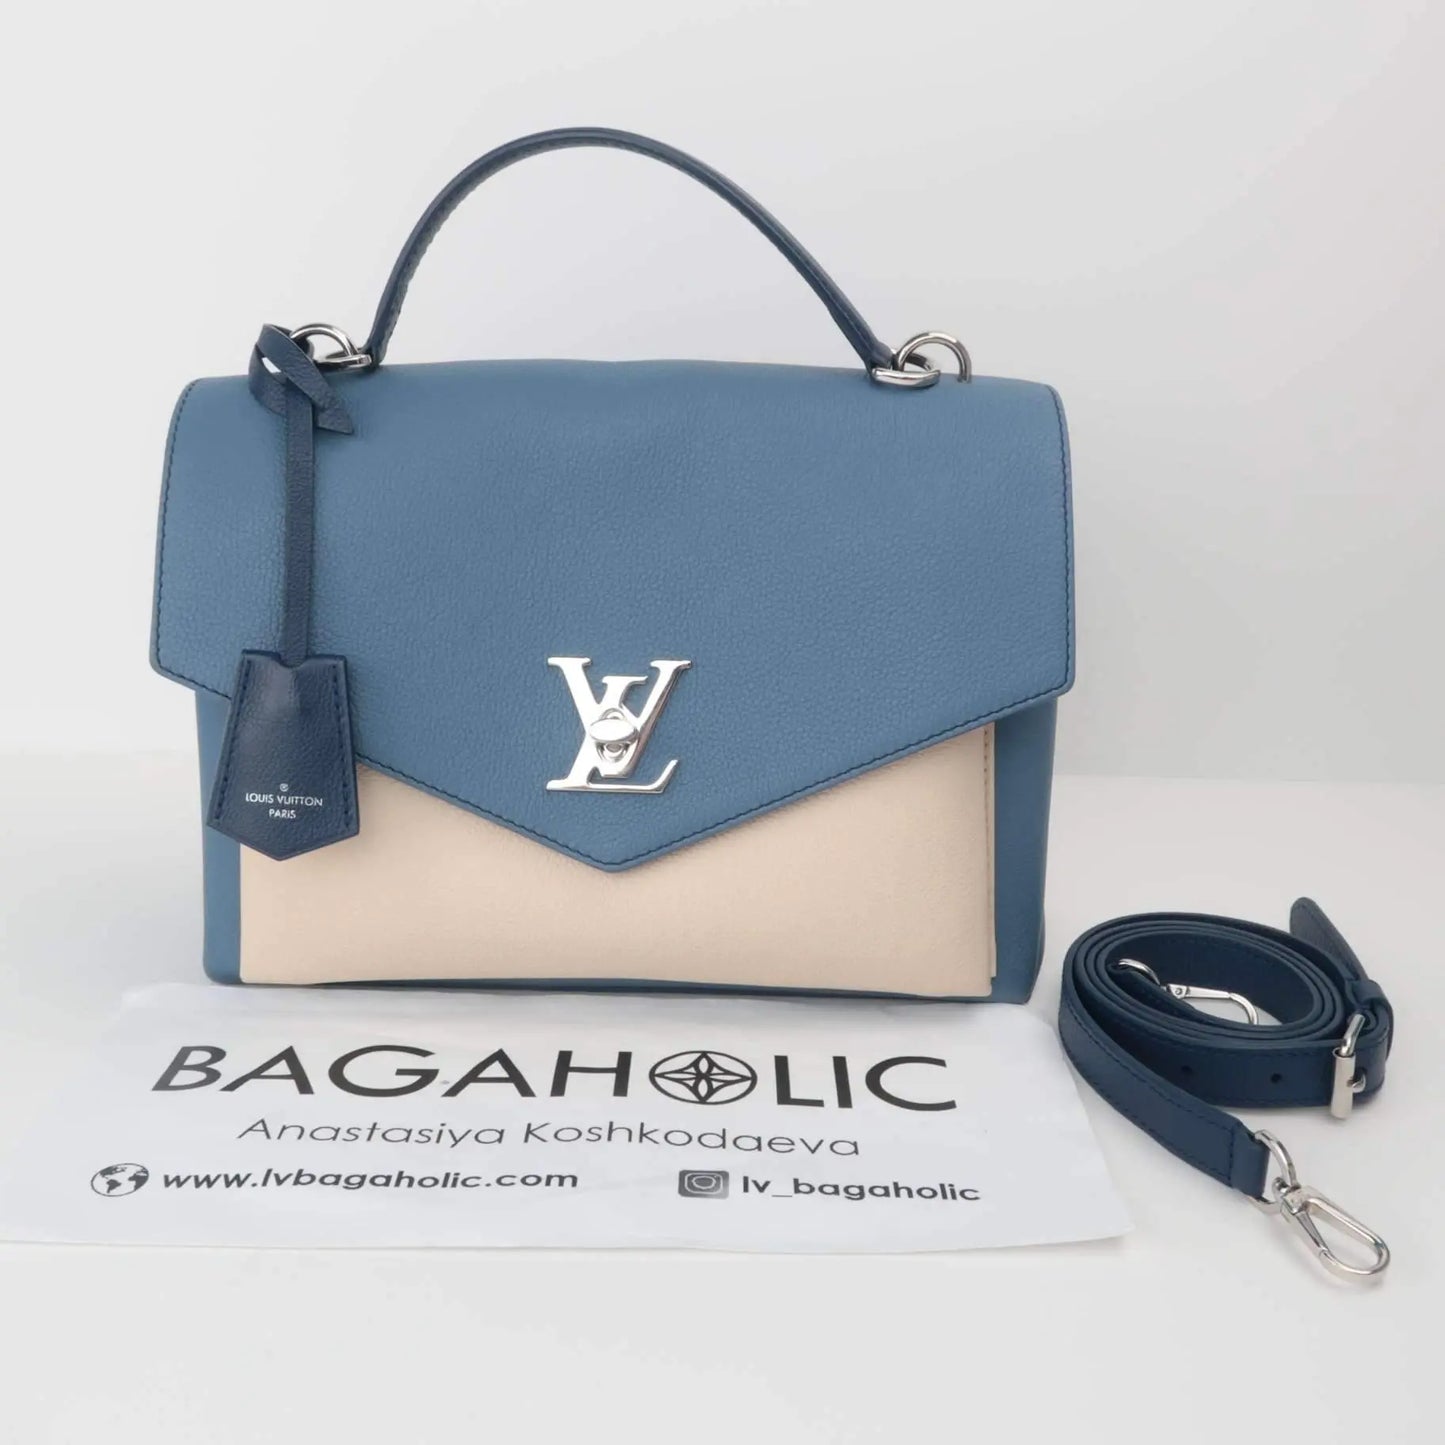 Mylockme Satchel Lockme Leather - Handbags